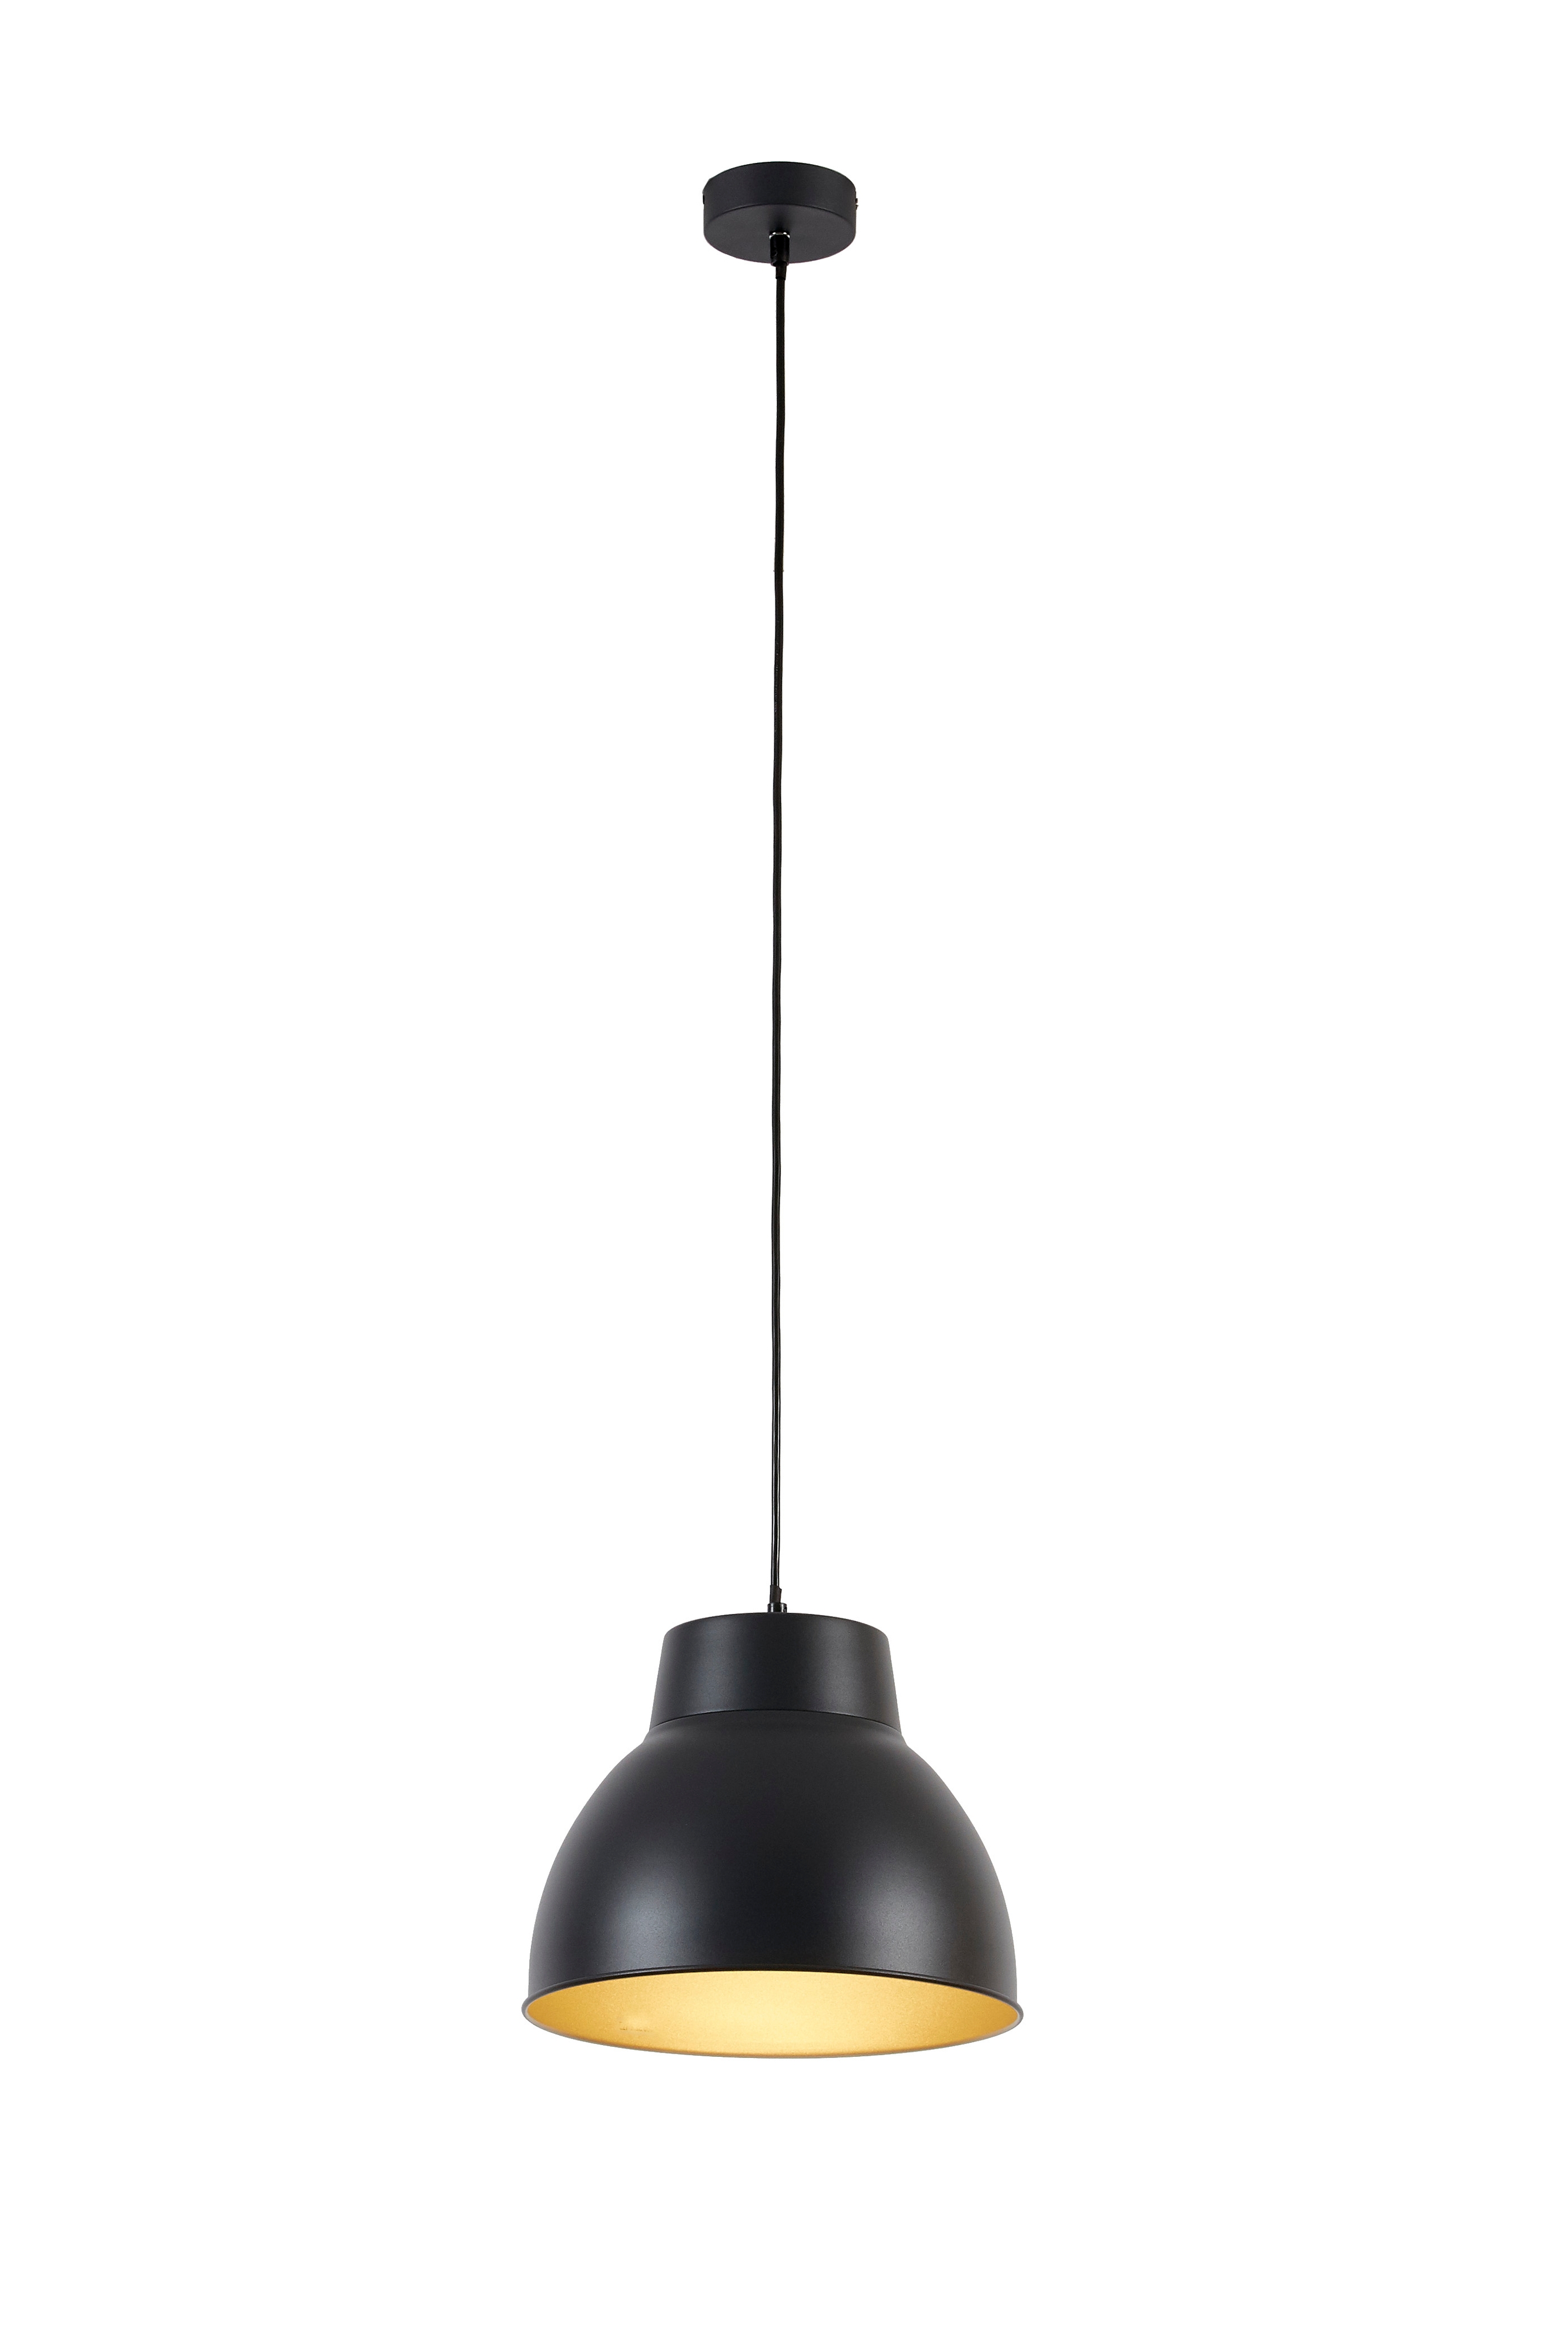 Lampadario Industriale Mezzo nero in metallo, D. 31 cm, INSPIRE - 1